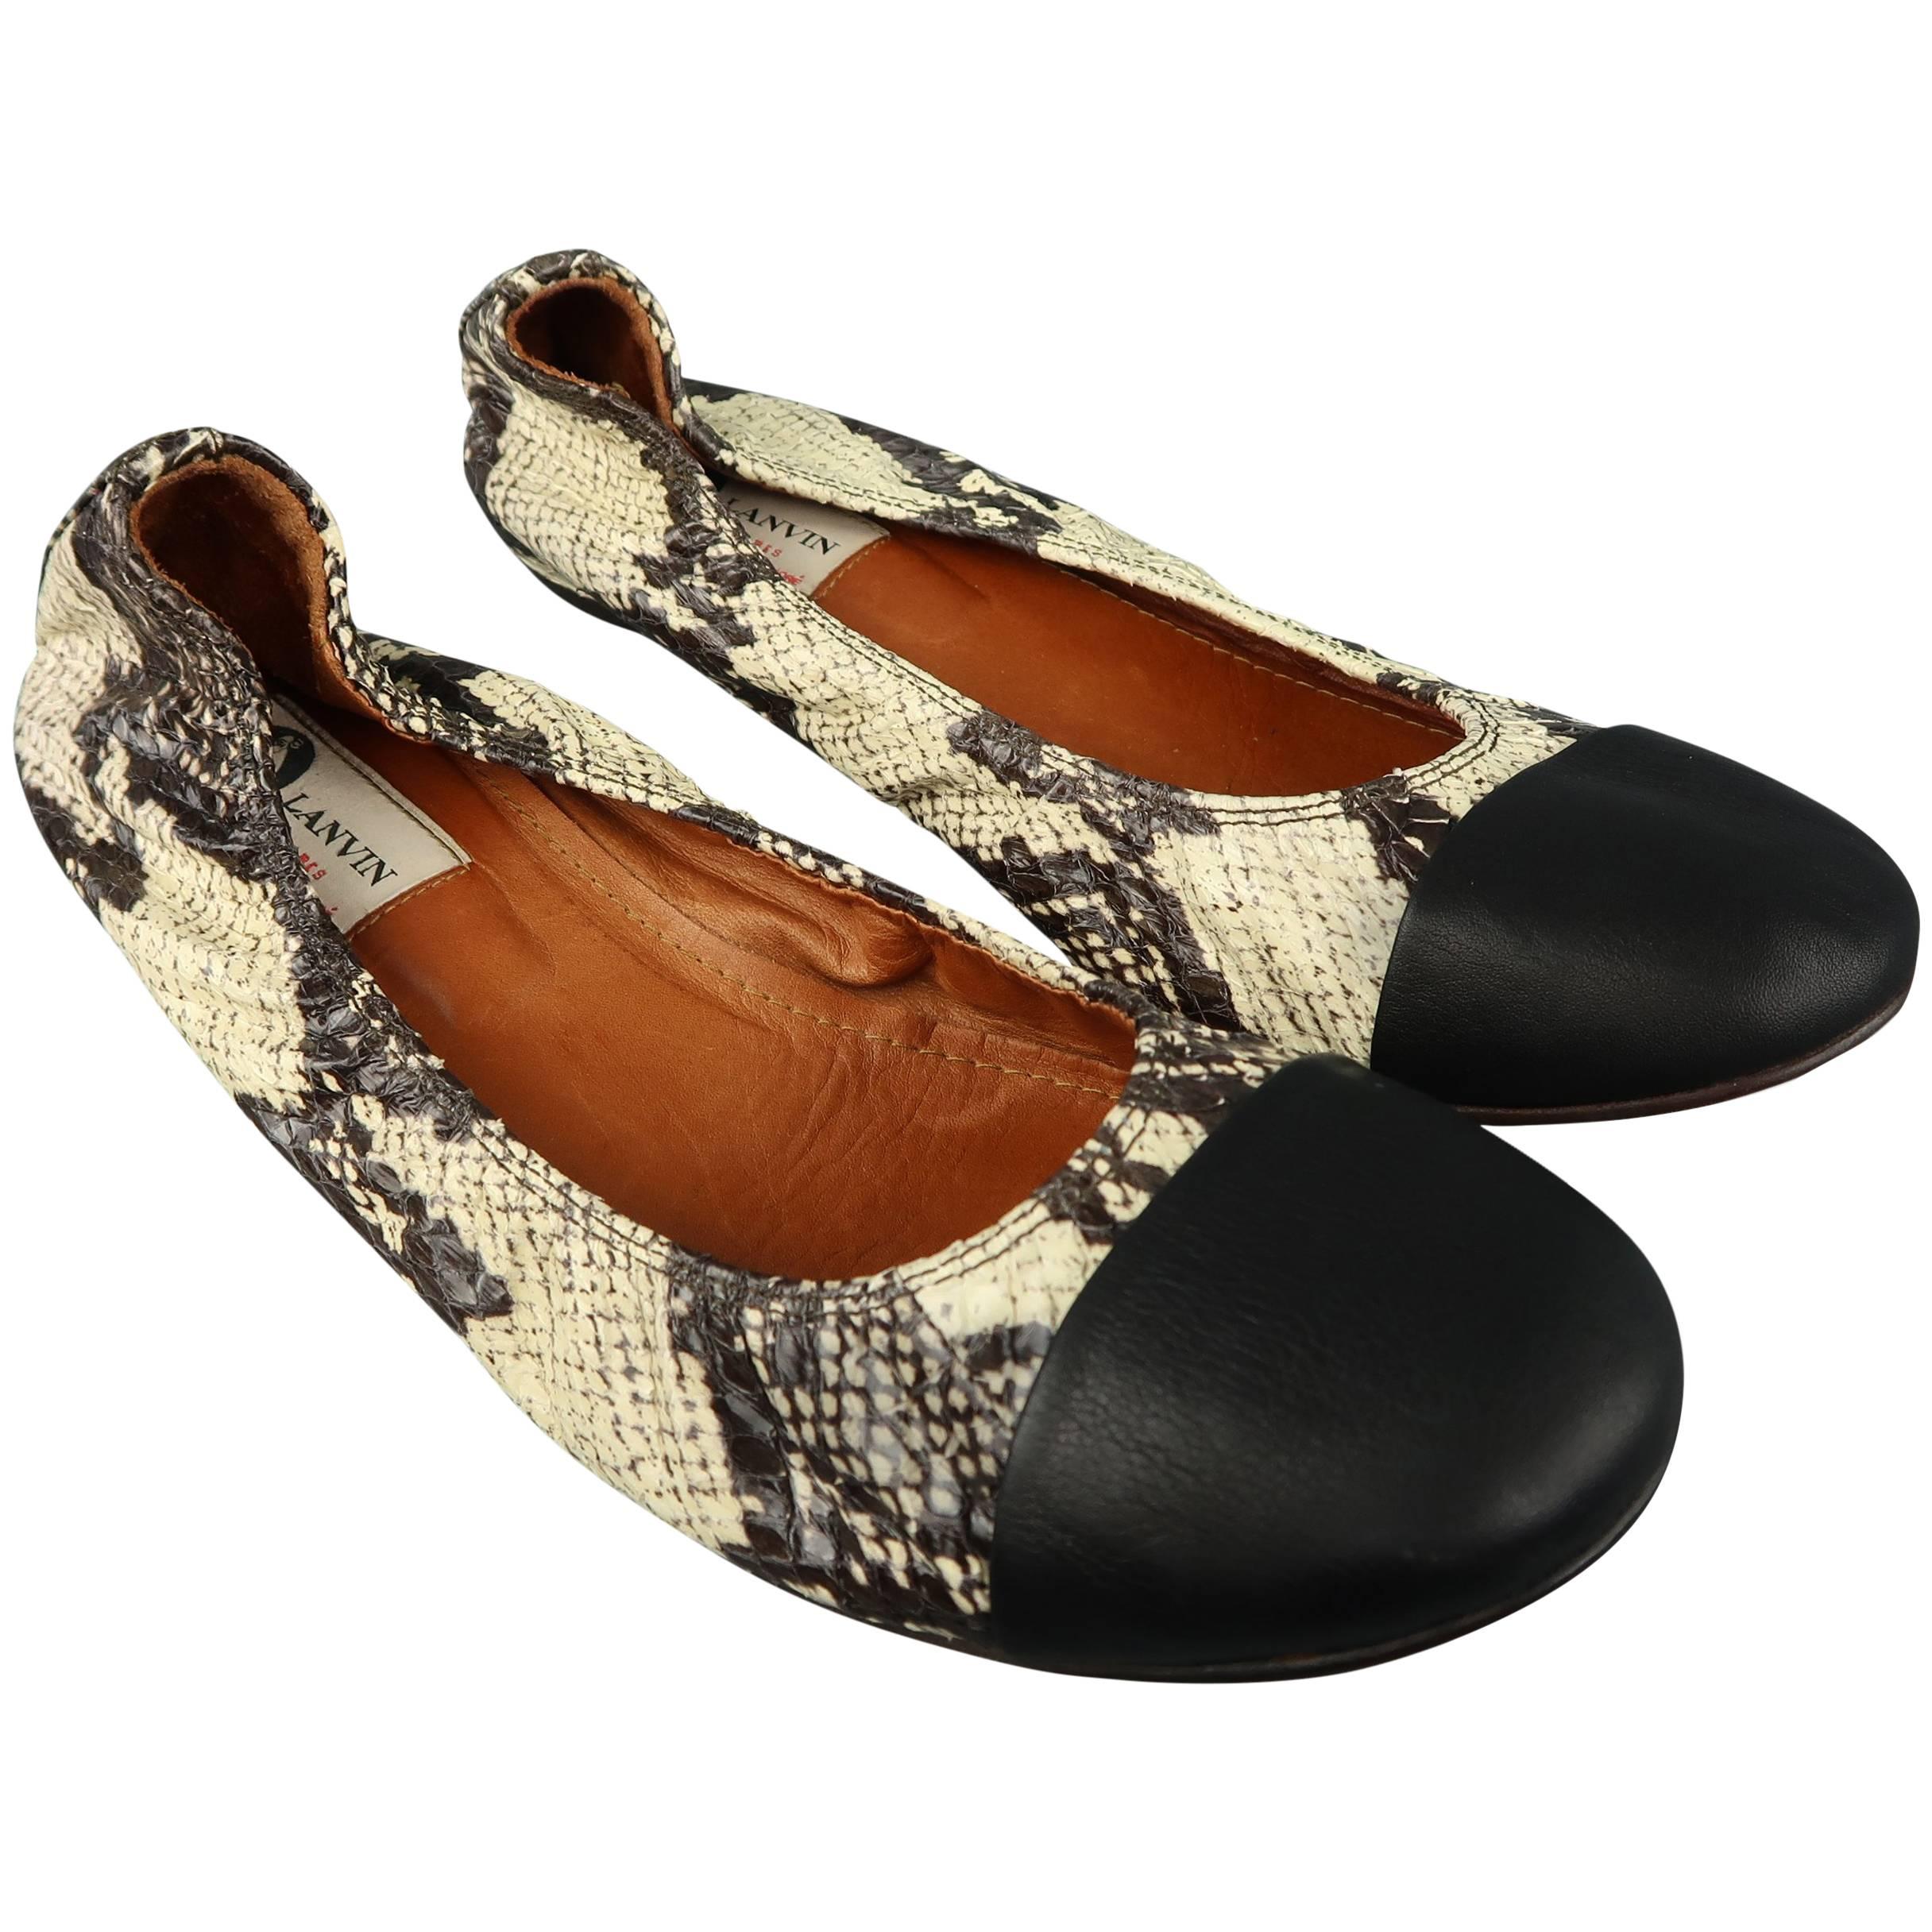 LANVIN Flats Size 10.5 Beige & Black Snake Skin Cap Toe Ballet Shoes